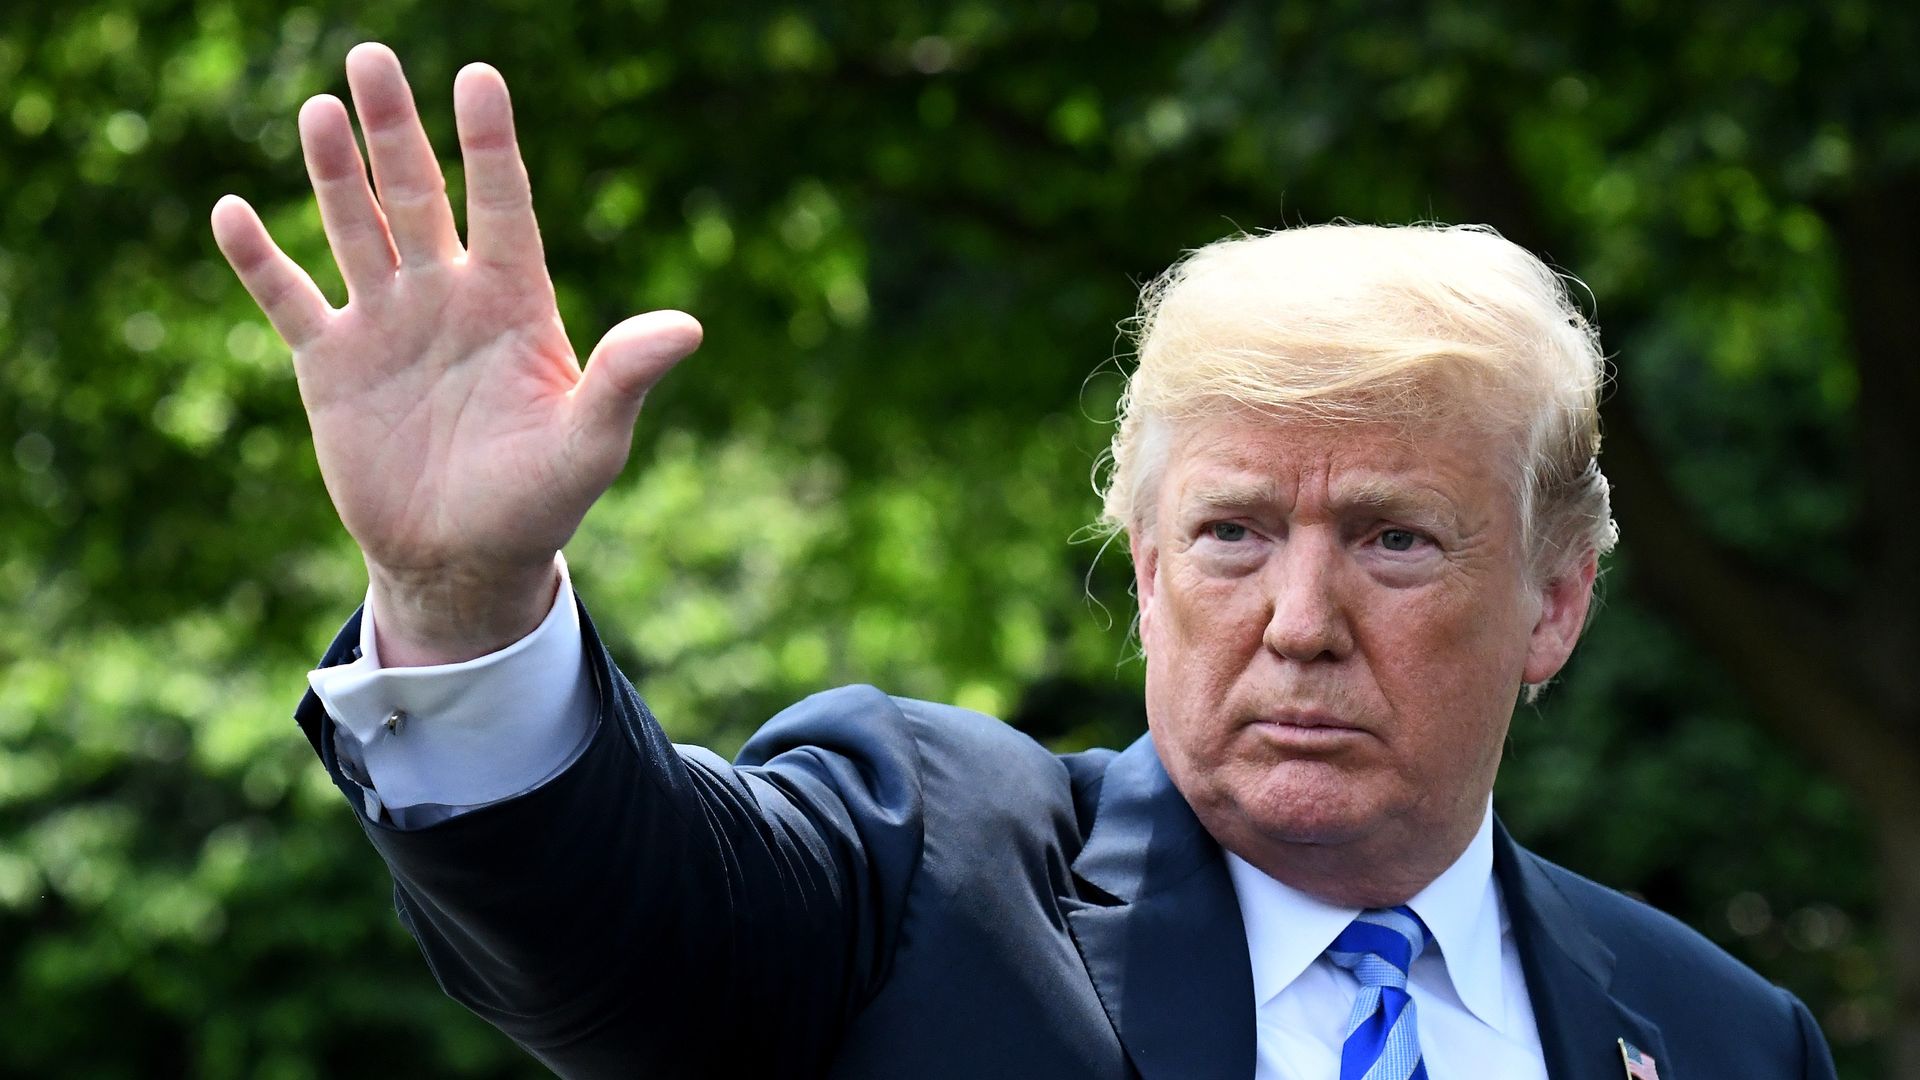 President Trump waving